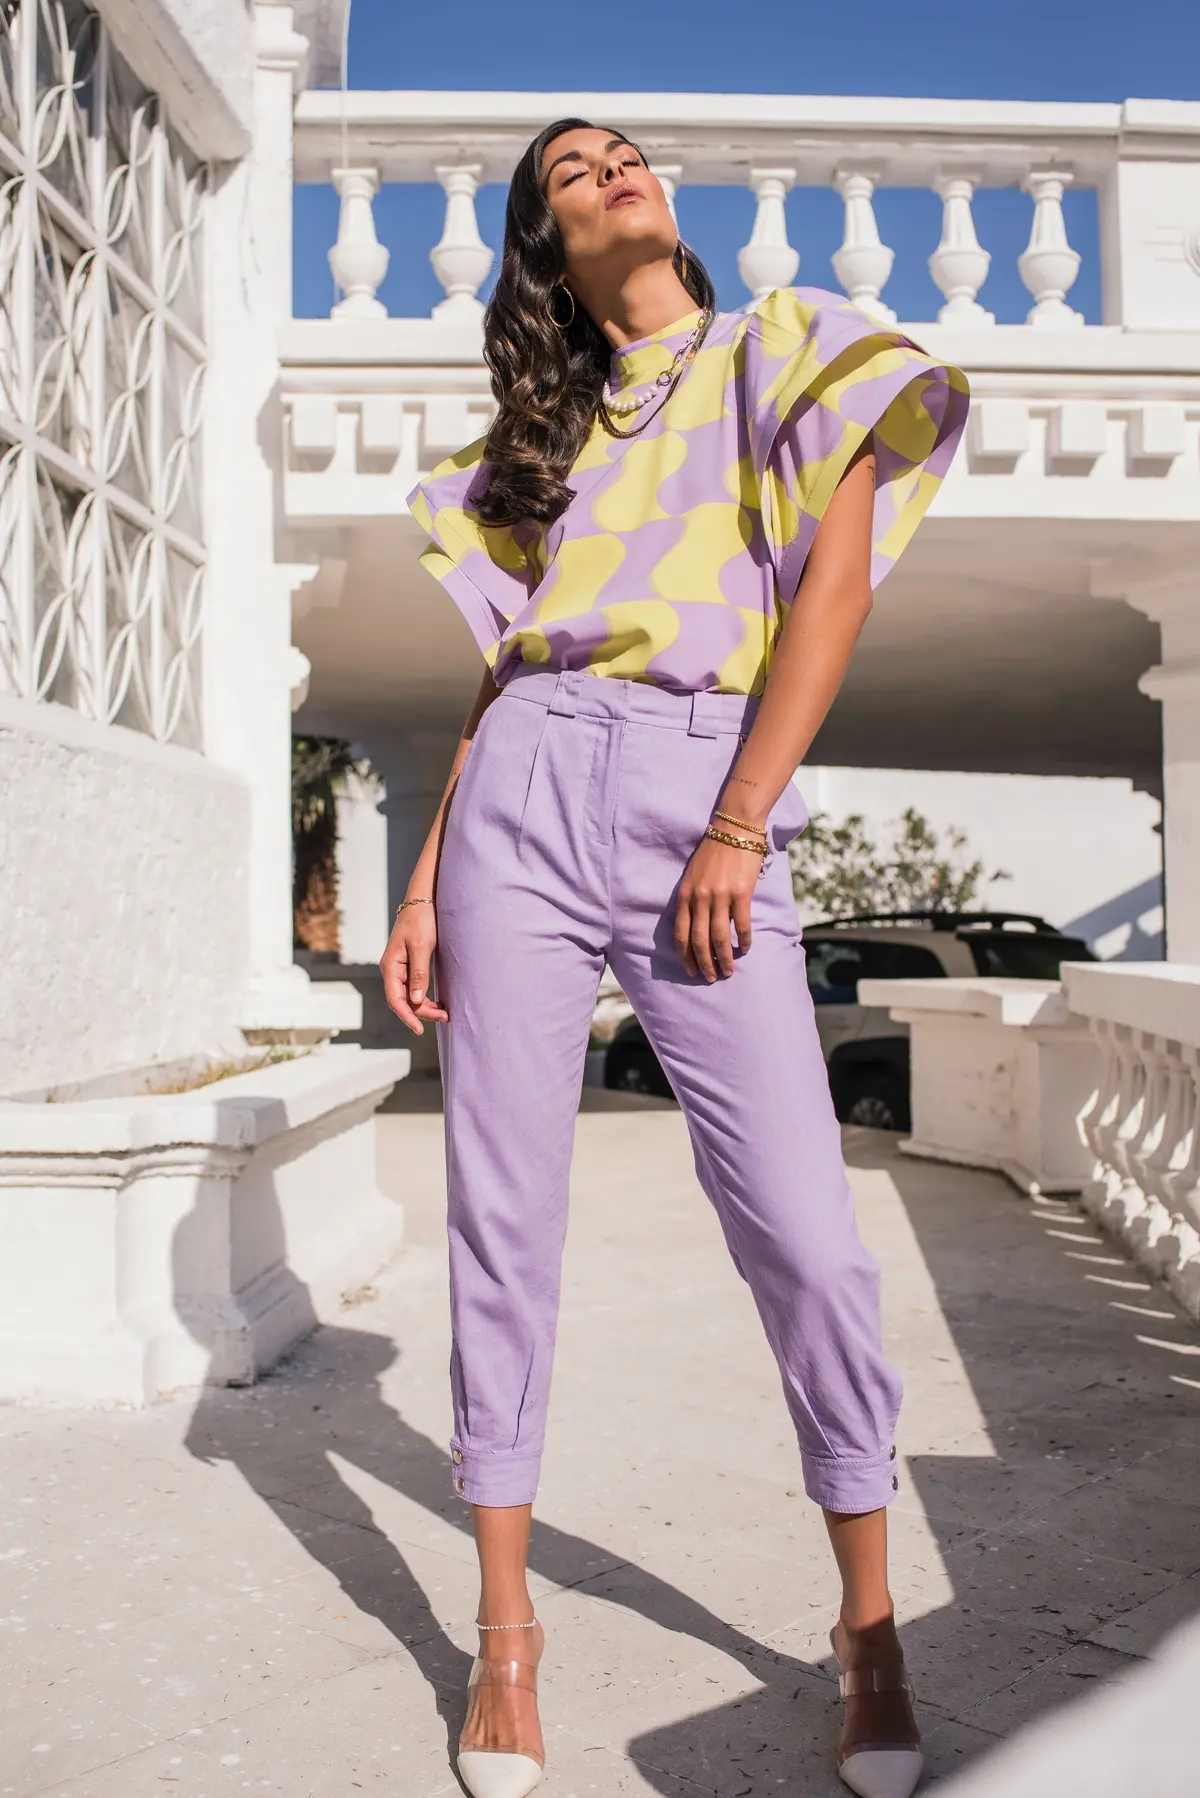 anguilla beachbody model ongjump trueanguillamagazine womeninsports  blackgirlmagic melaninpoppin  Instagram